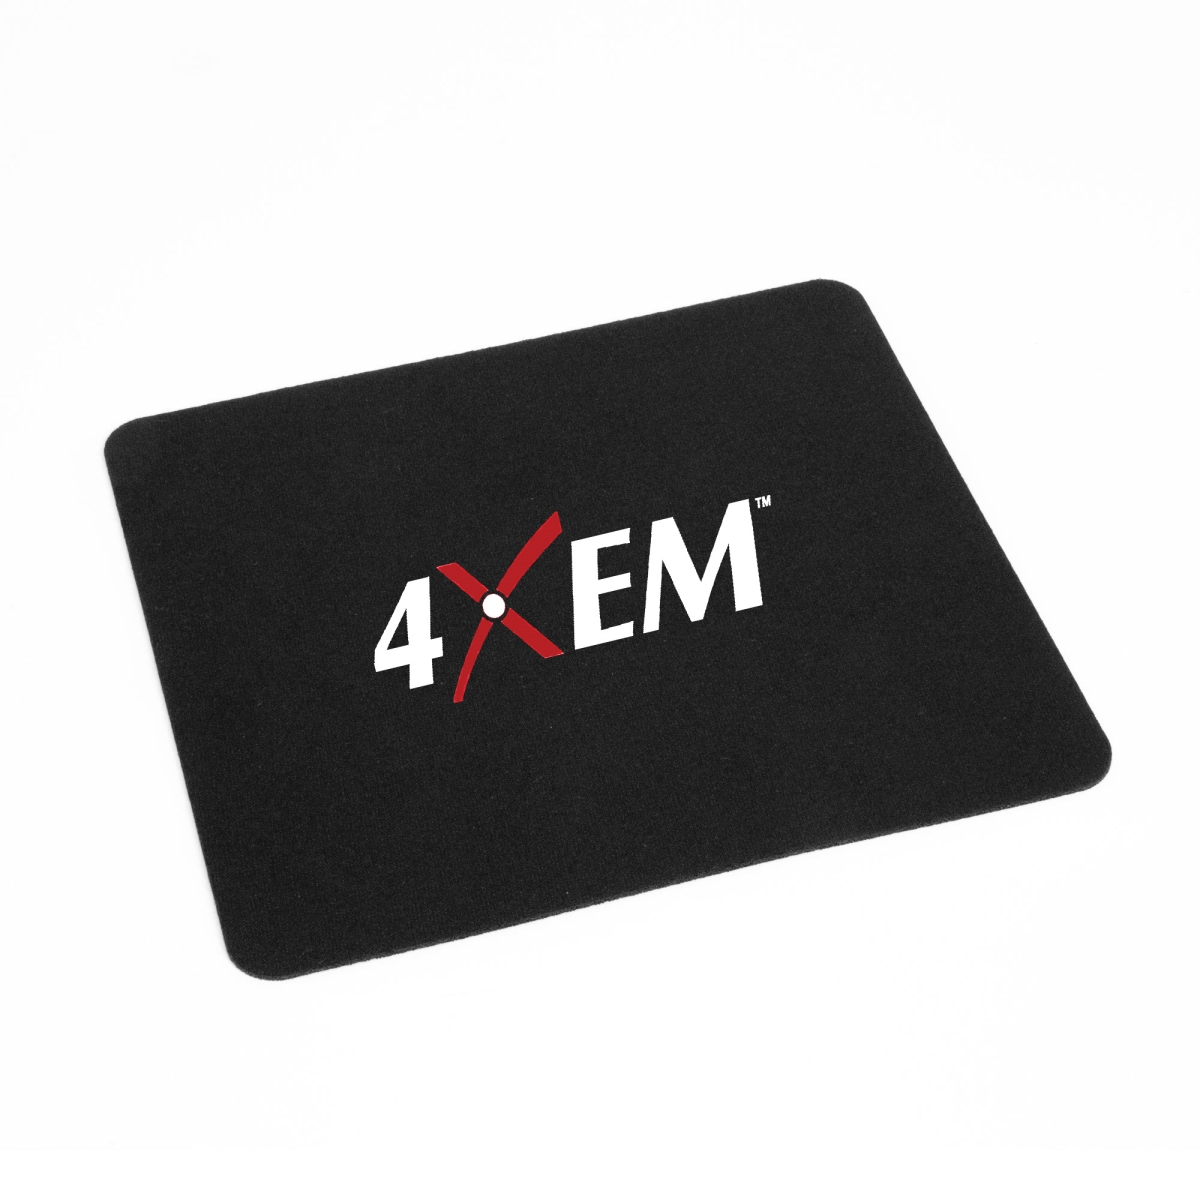 Picture of 4xem 4XMOUSEPAD Logo Mouse Pad